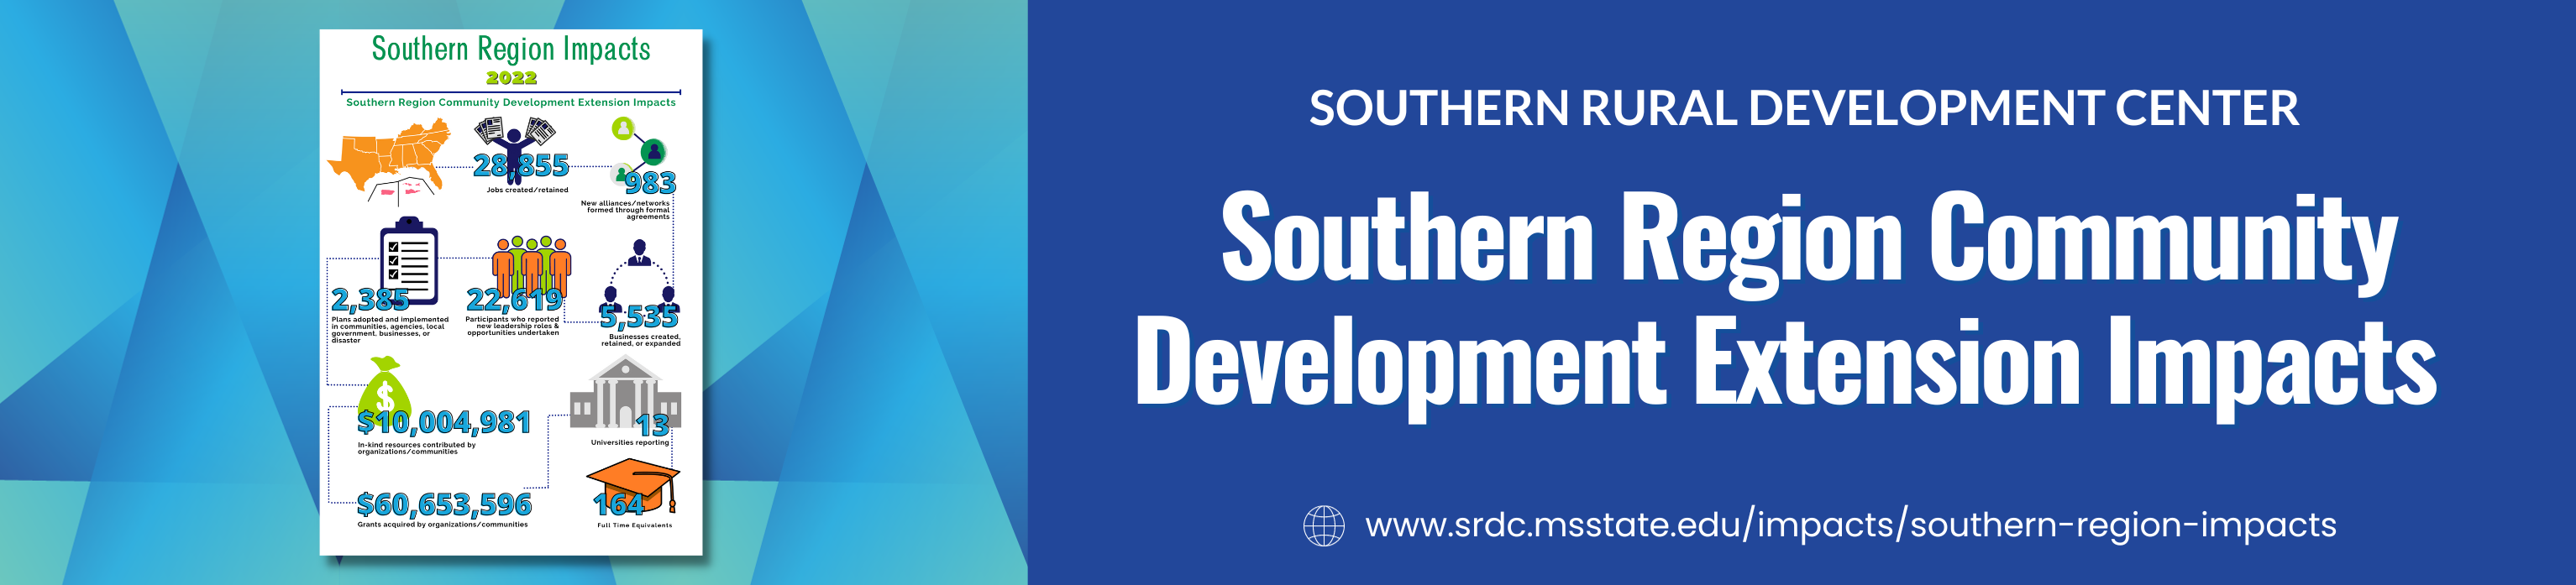 Southern Region Community Development Extension Impacts